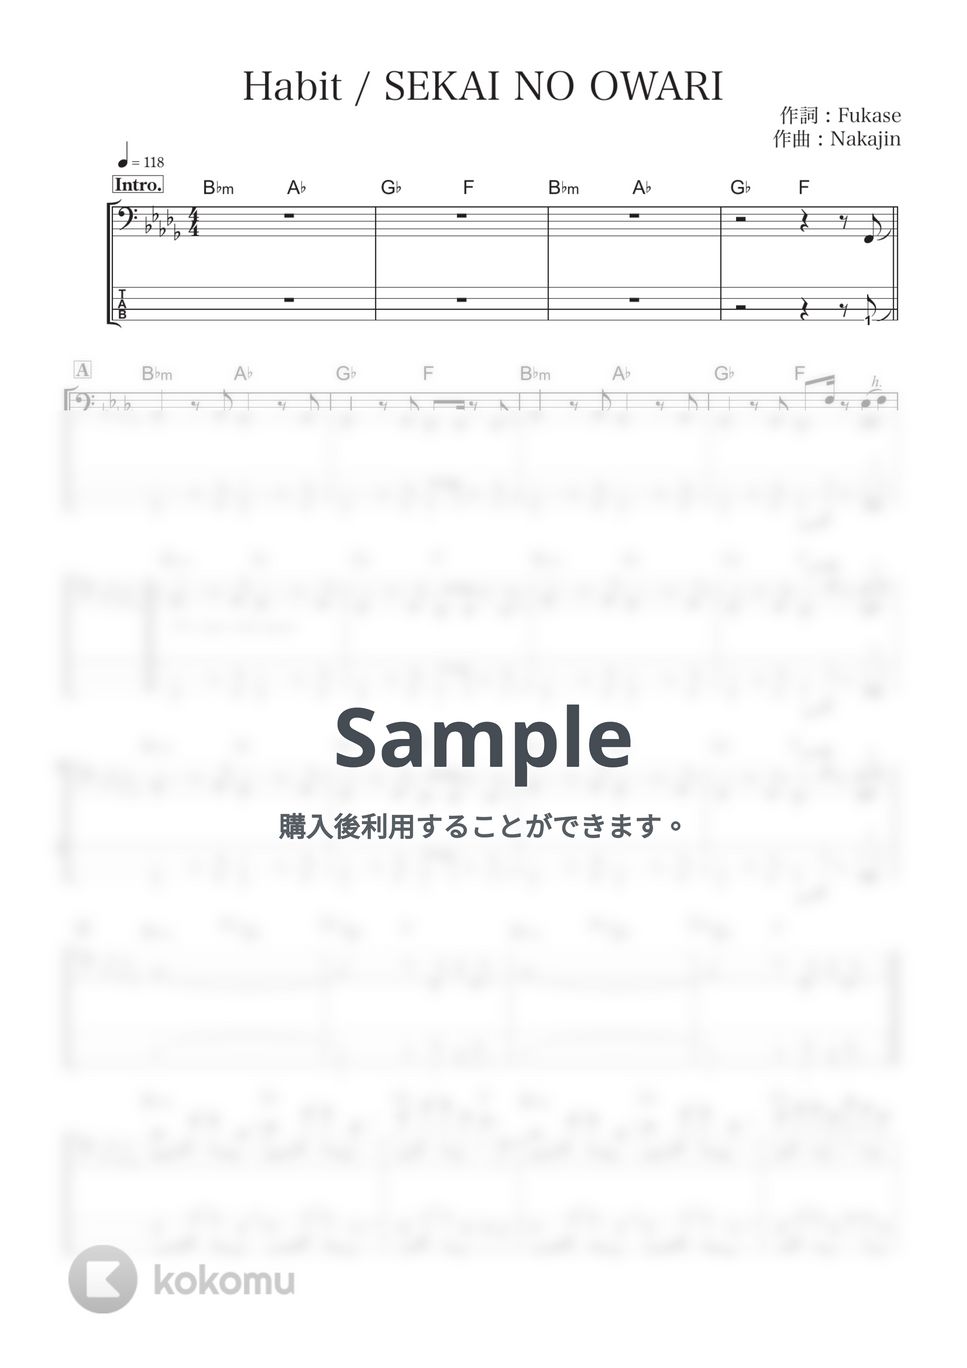 SEKAI NO OWARI - Habit by エレキベースのタブ譜